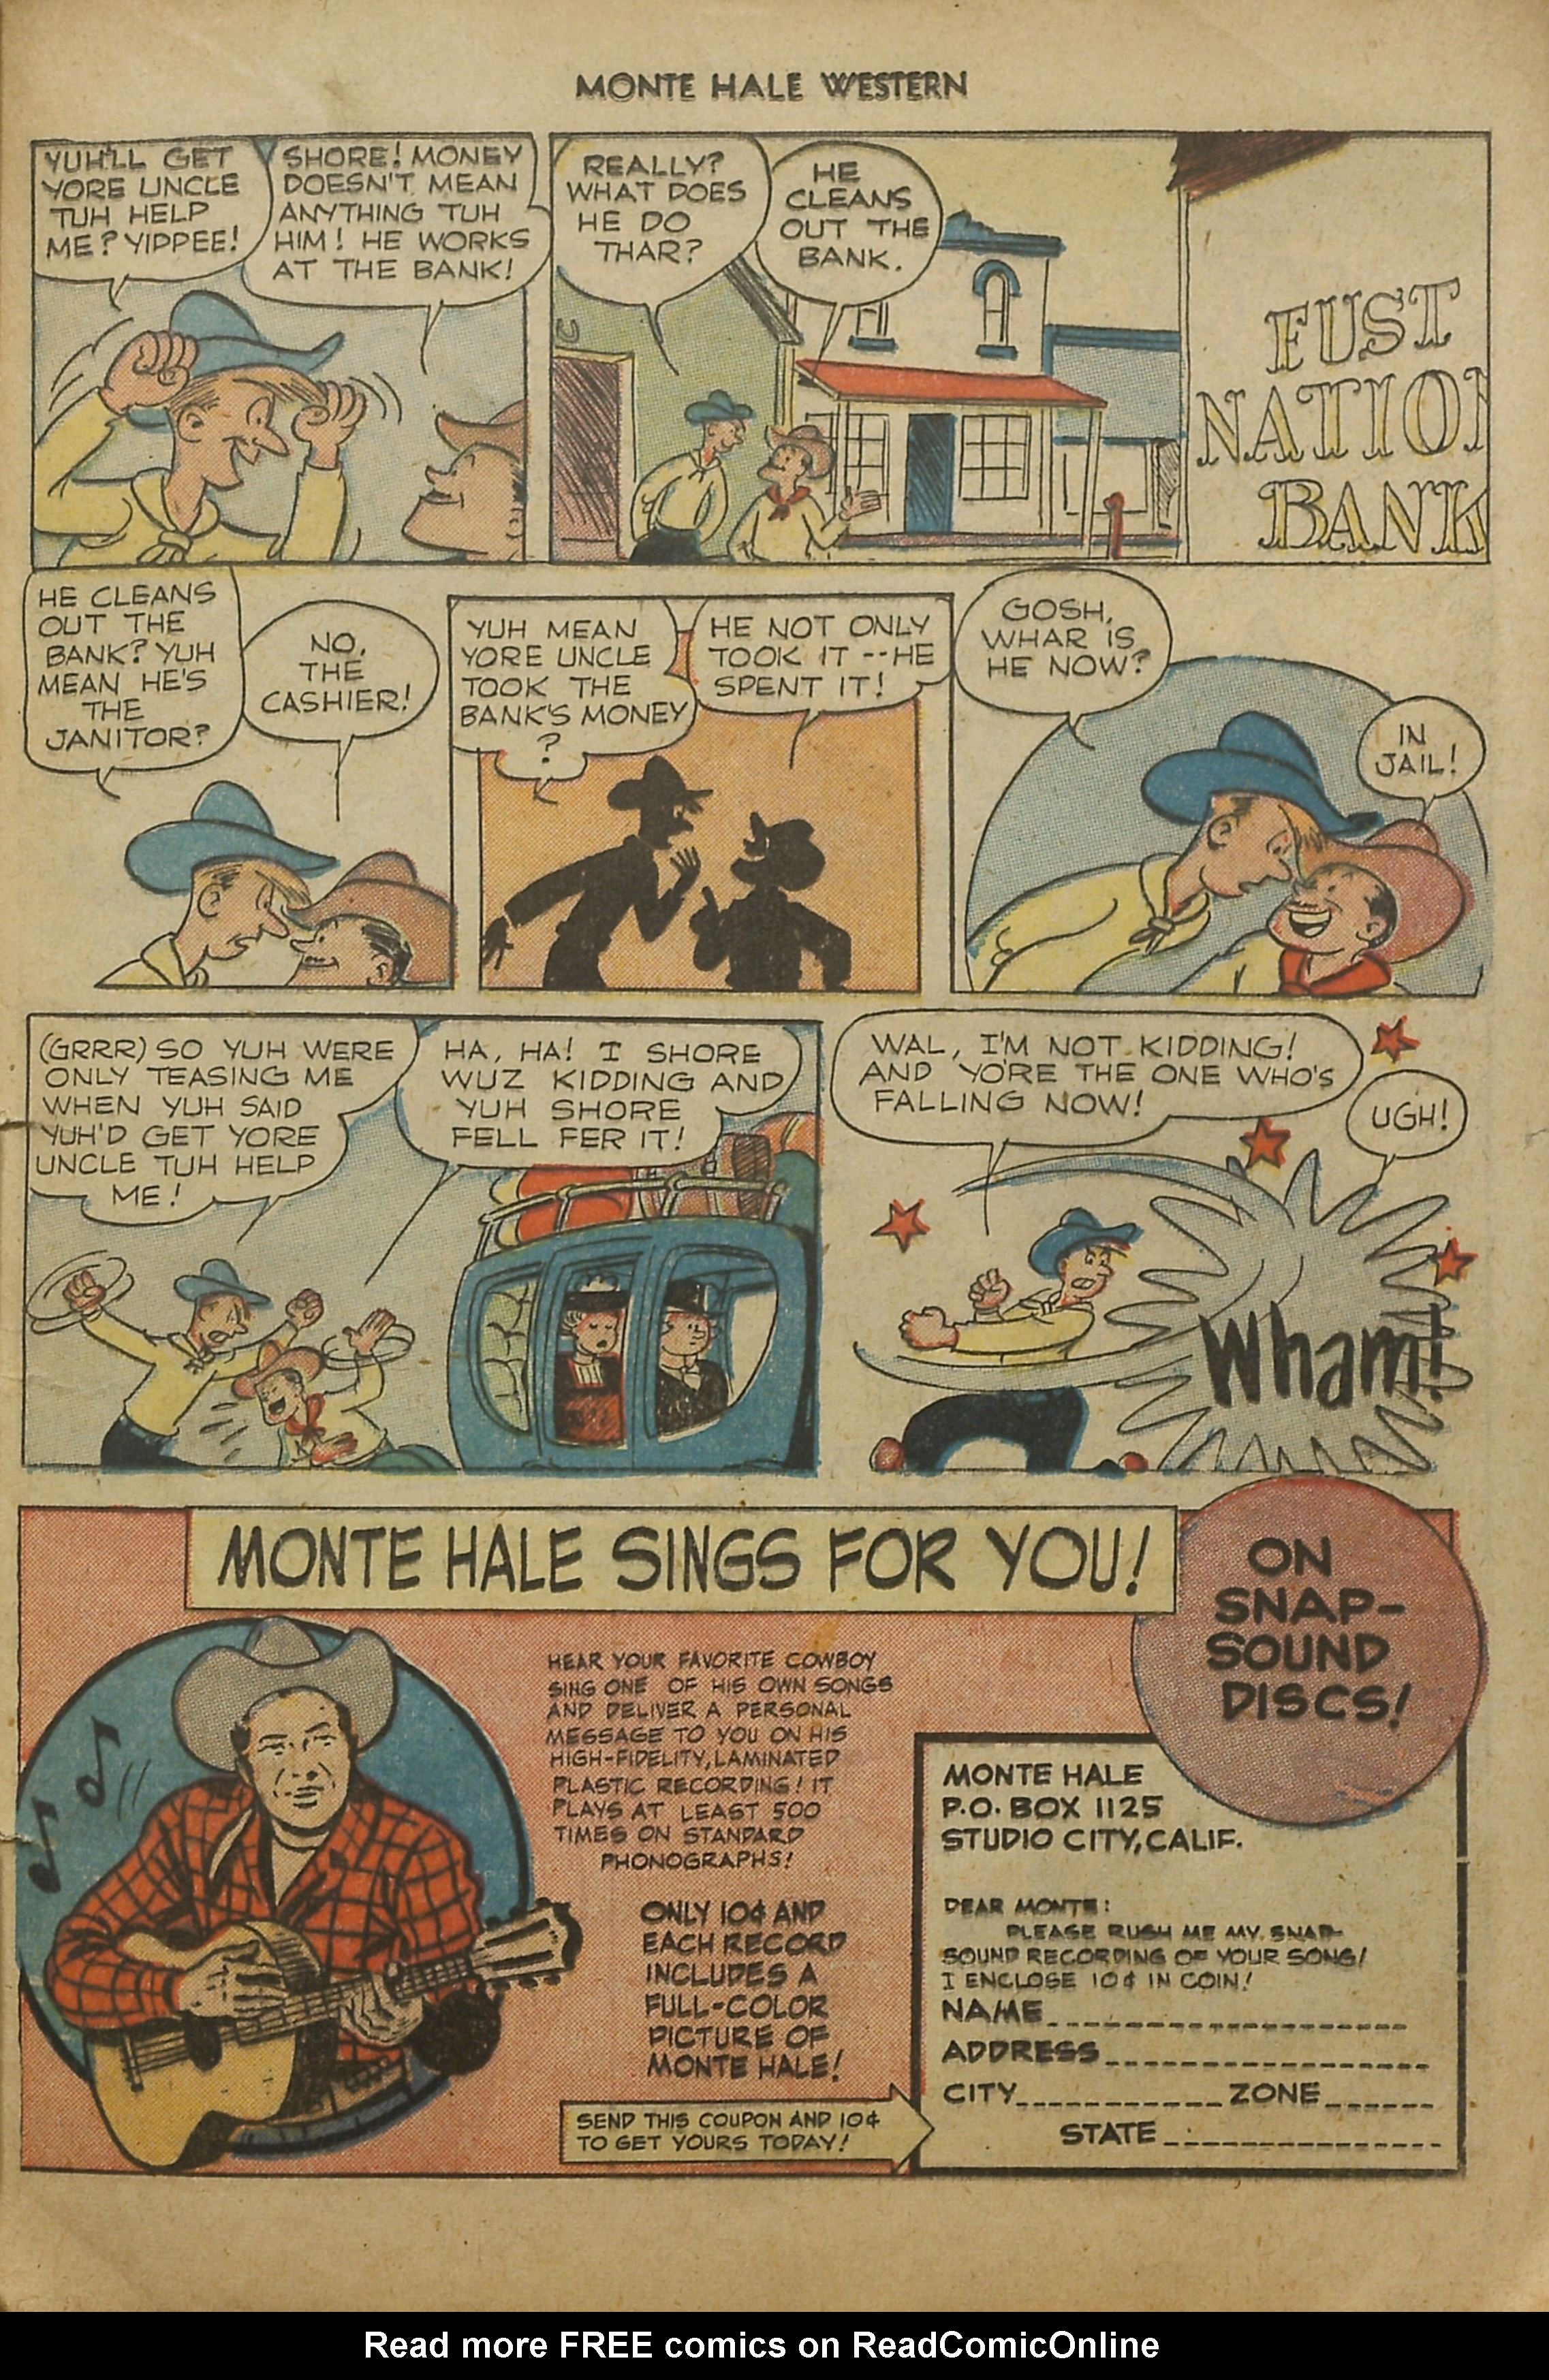 Read online Monte Hale Western comic -  Issue #45 - 26